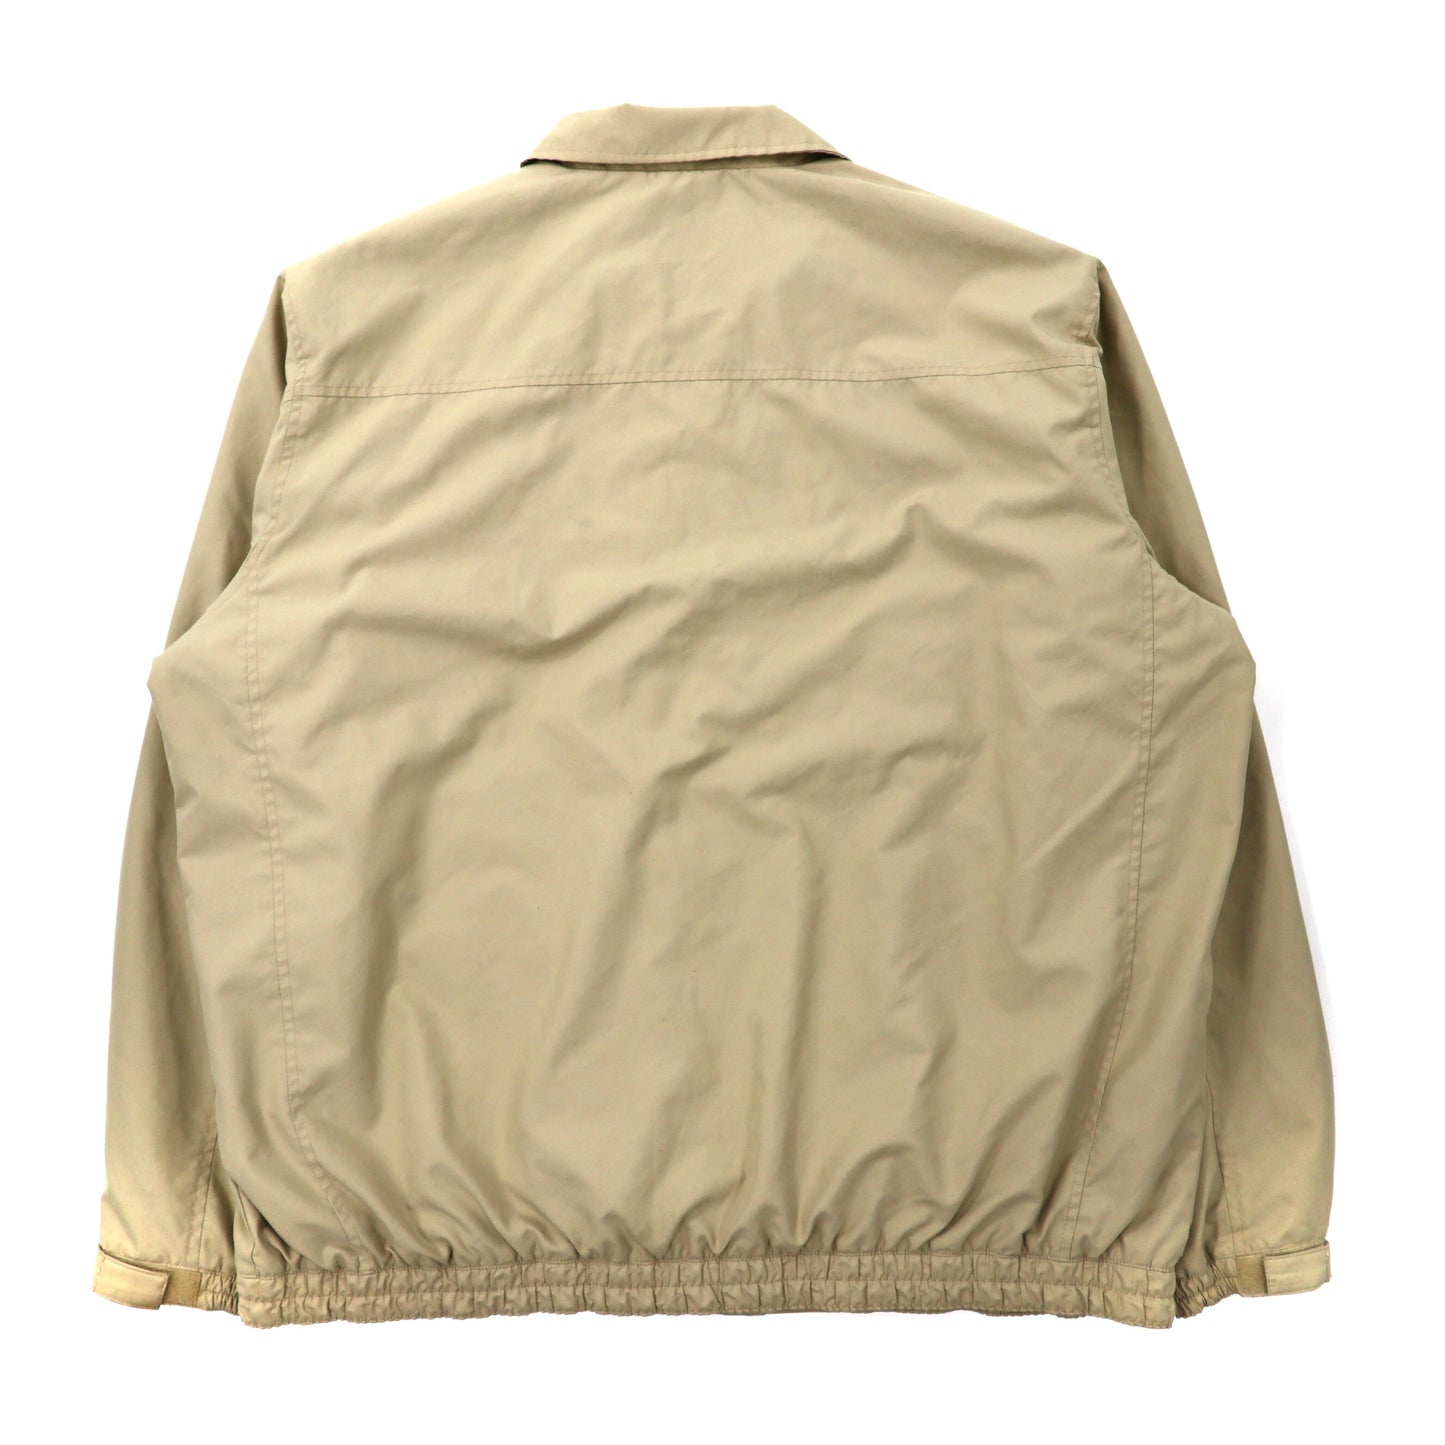 CHAPS Swing Top Harrington Jacket 2XLT Beige Polyester Big Size 